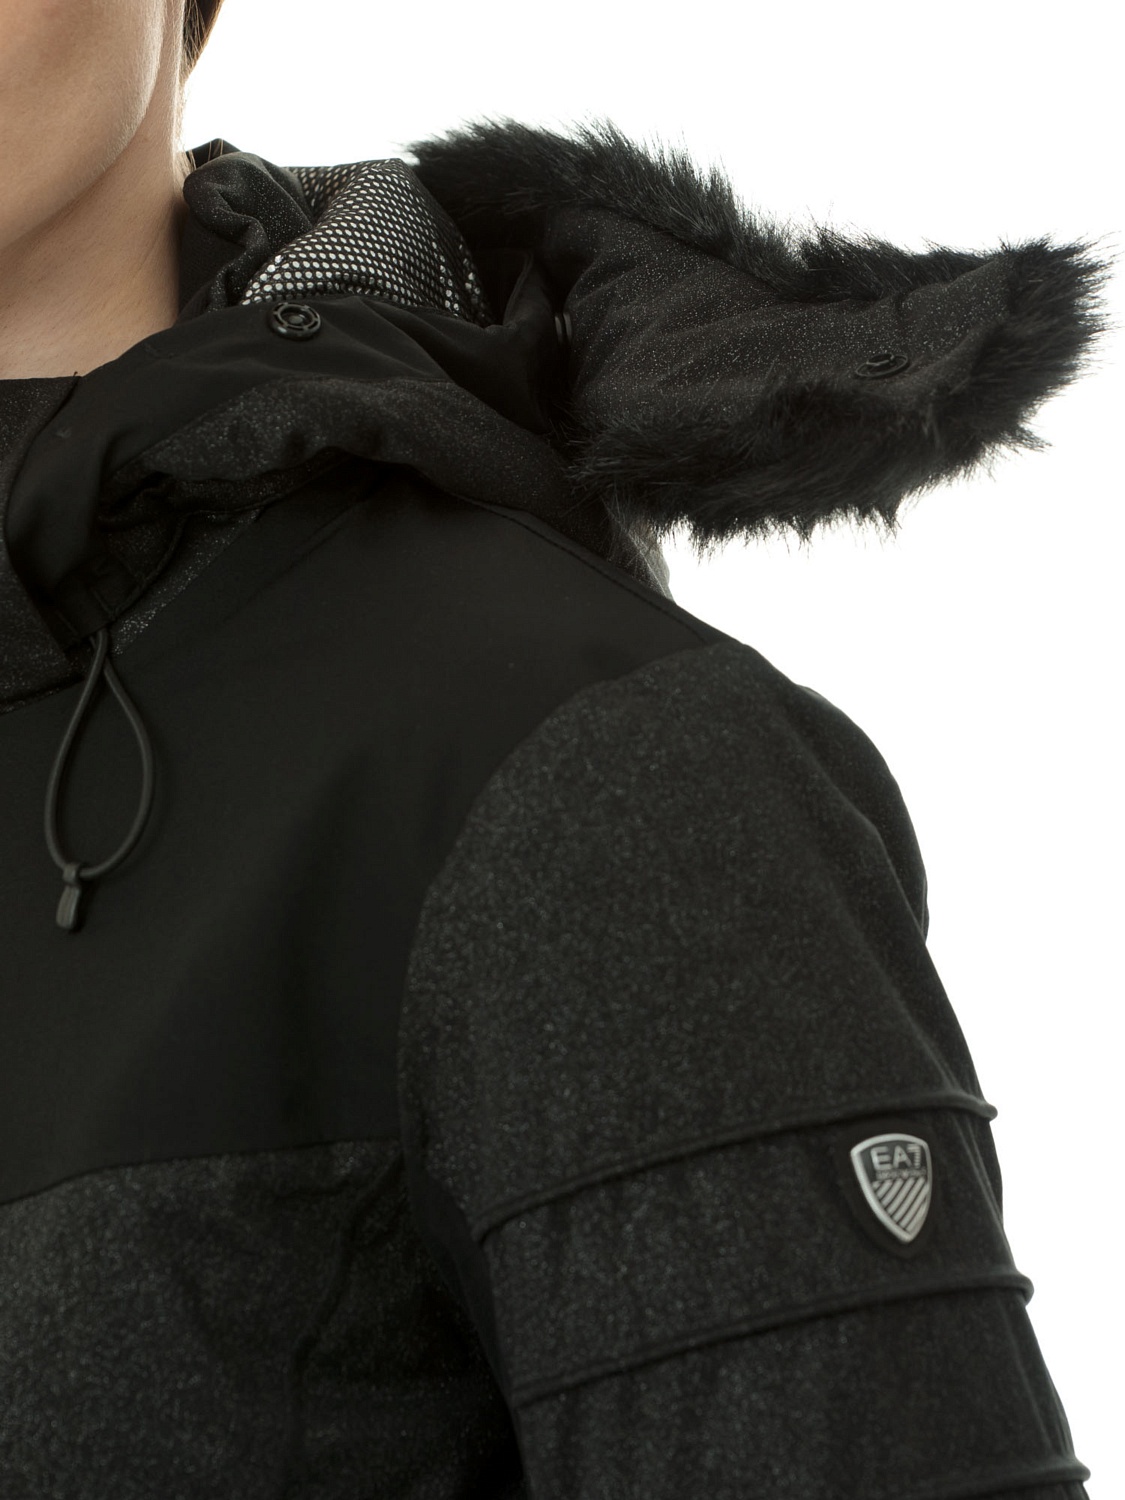 Куртка горнолыжная EA7 Emporio Armani Ski W Cortina Fashion Grey Glitter